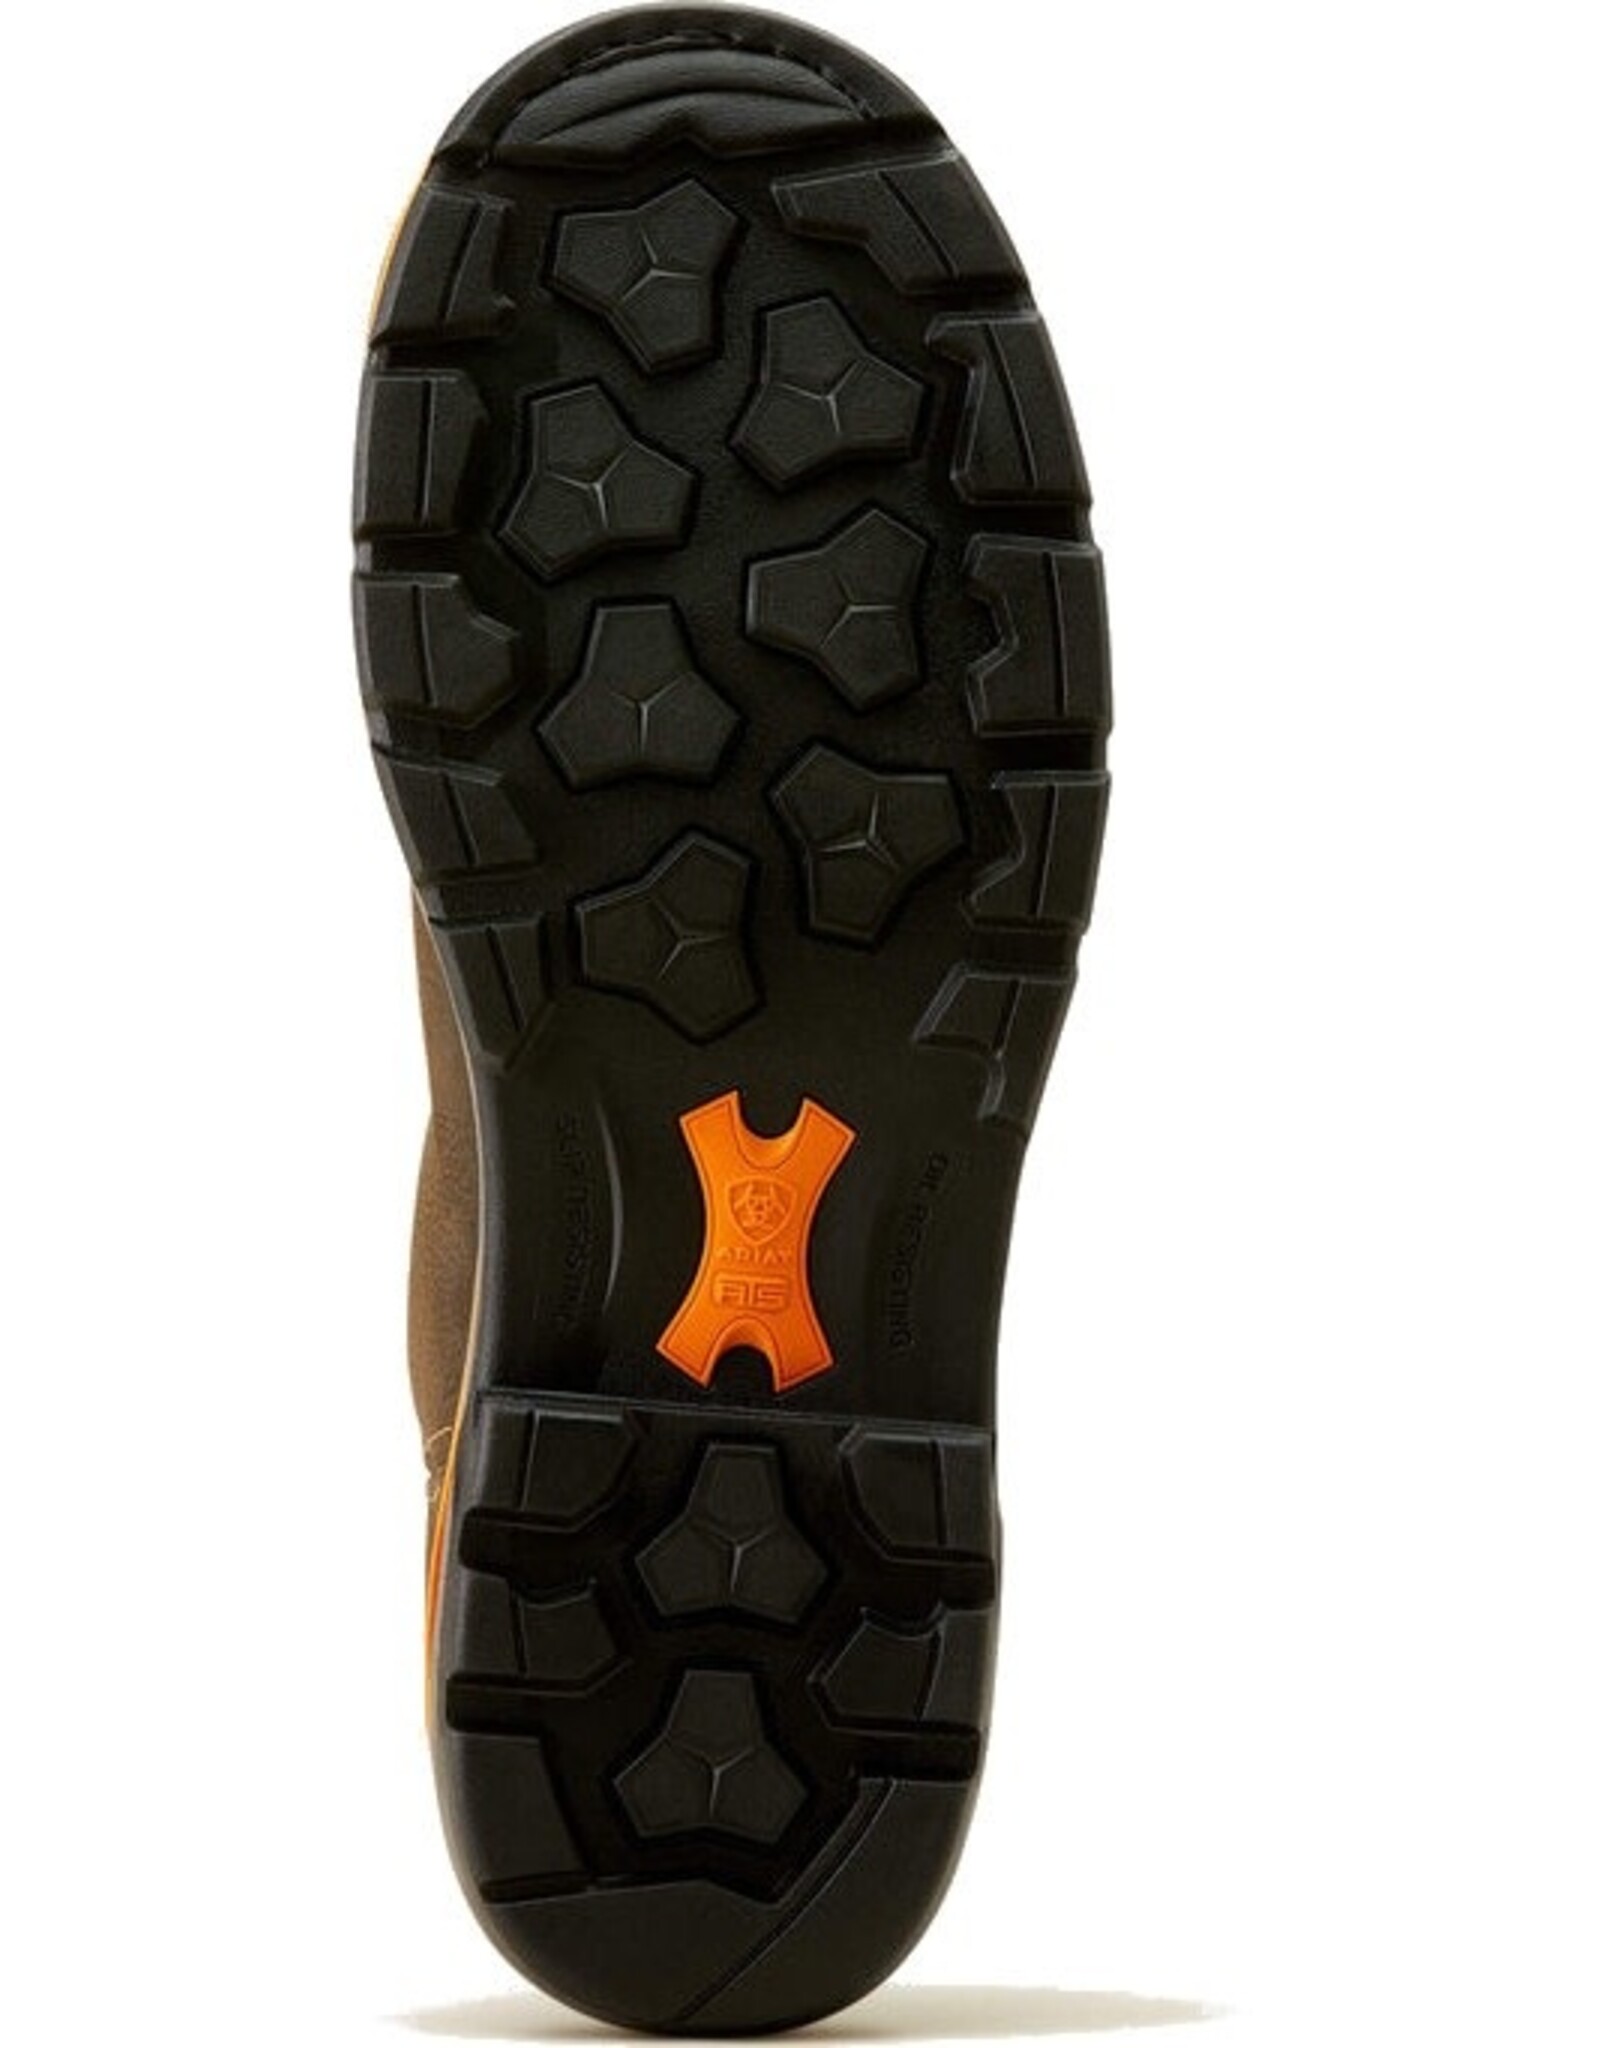 Ariat Men's Stump Jumper Pull On BOA Waterproof Composite Toe 10048061 Work Boots